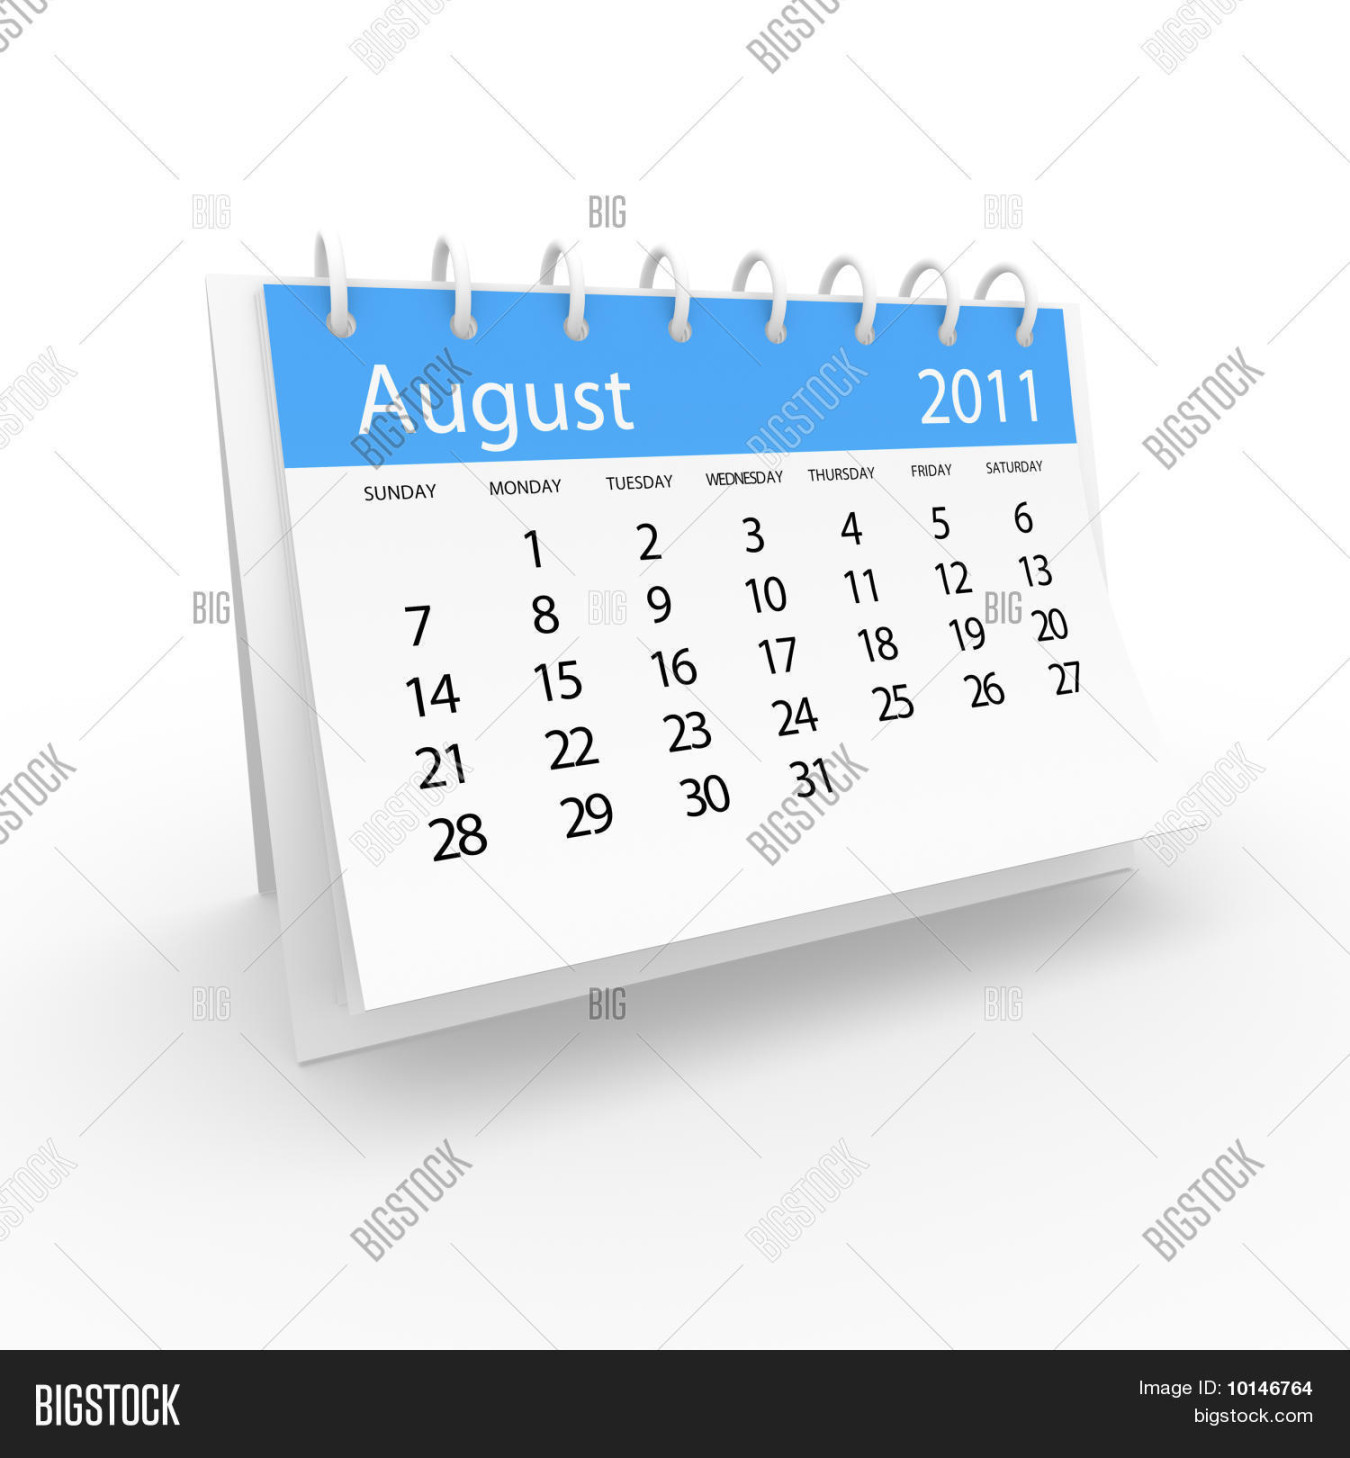 Calendar  August Image & Photo (Free Trial)  Bigstock